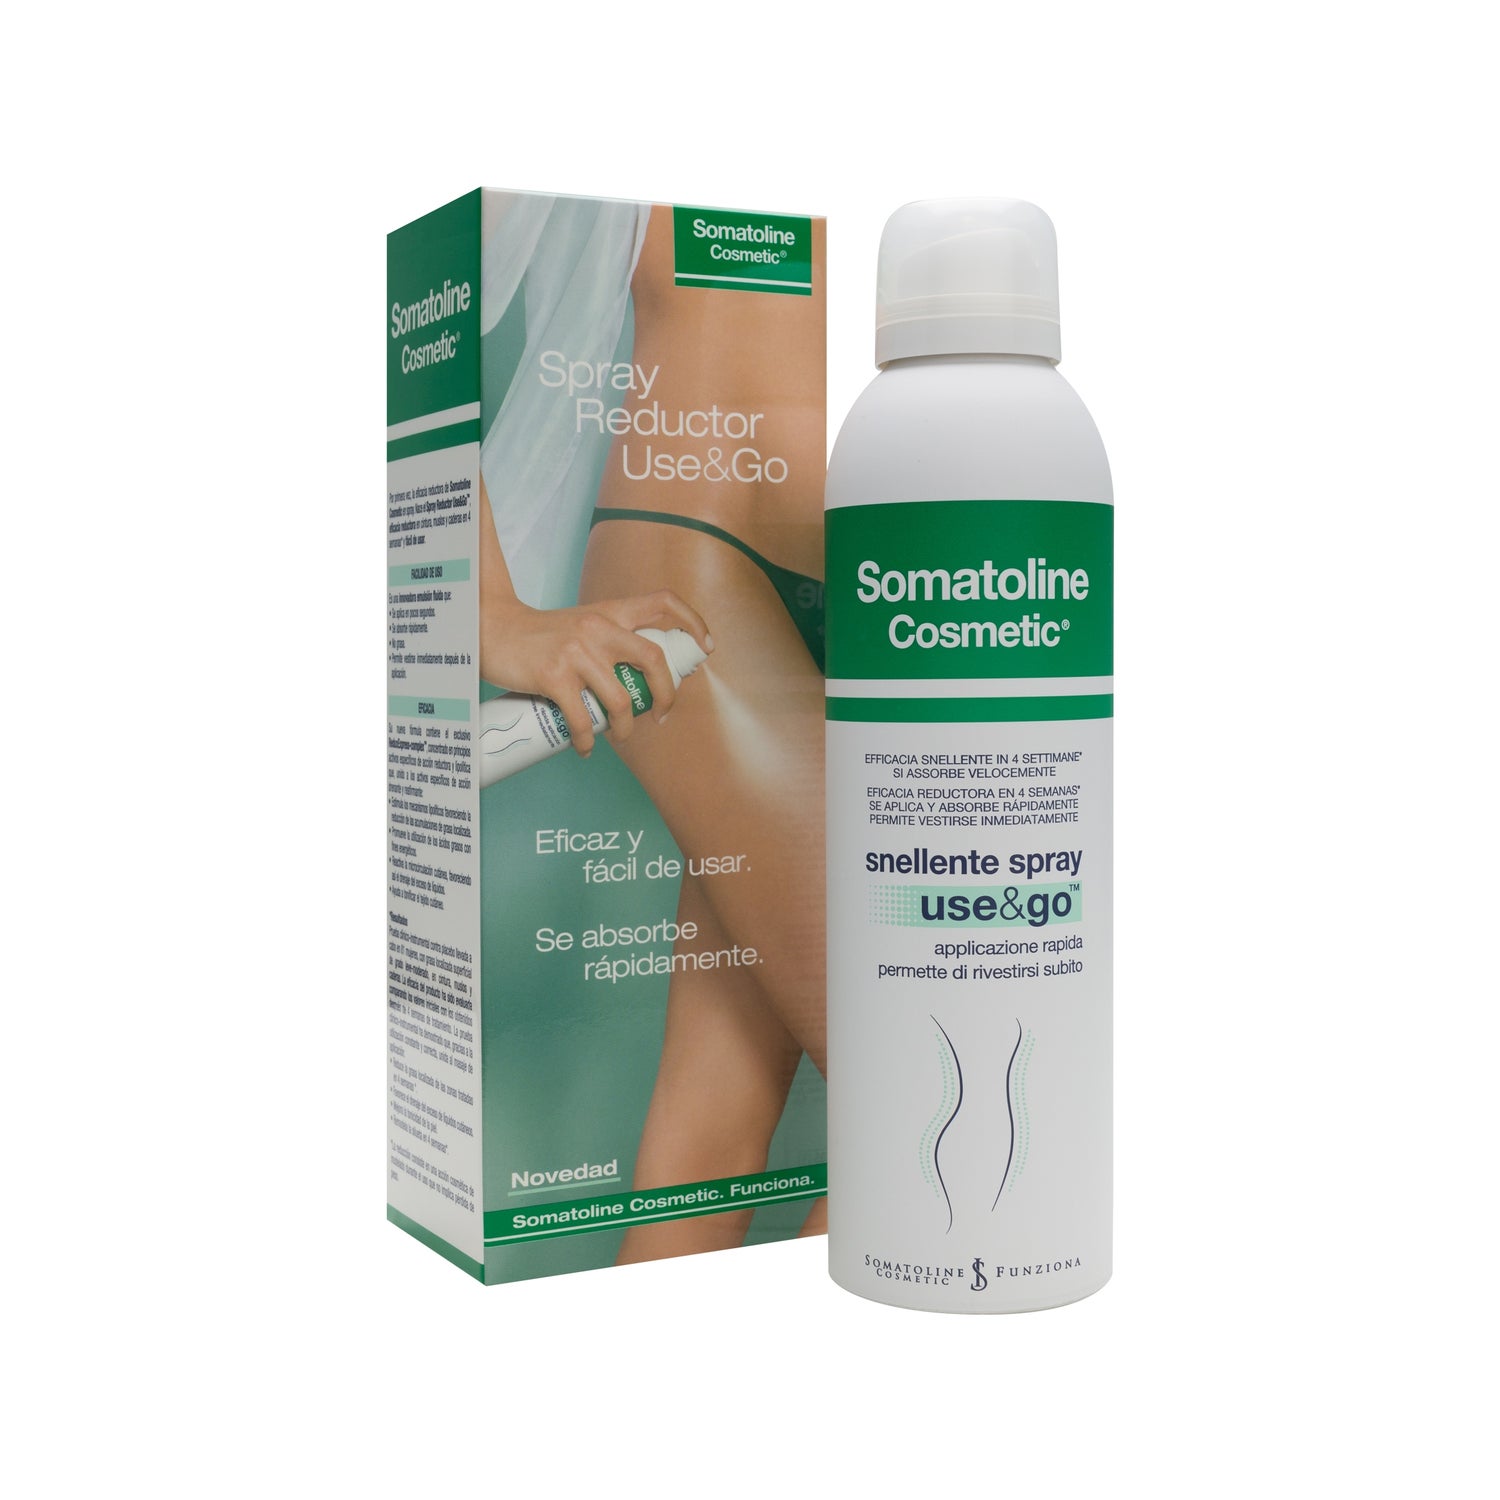 somatoline cosmetic spray reductor use go 200ml